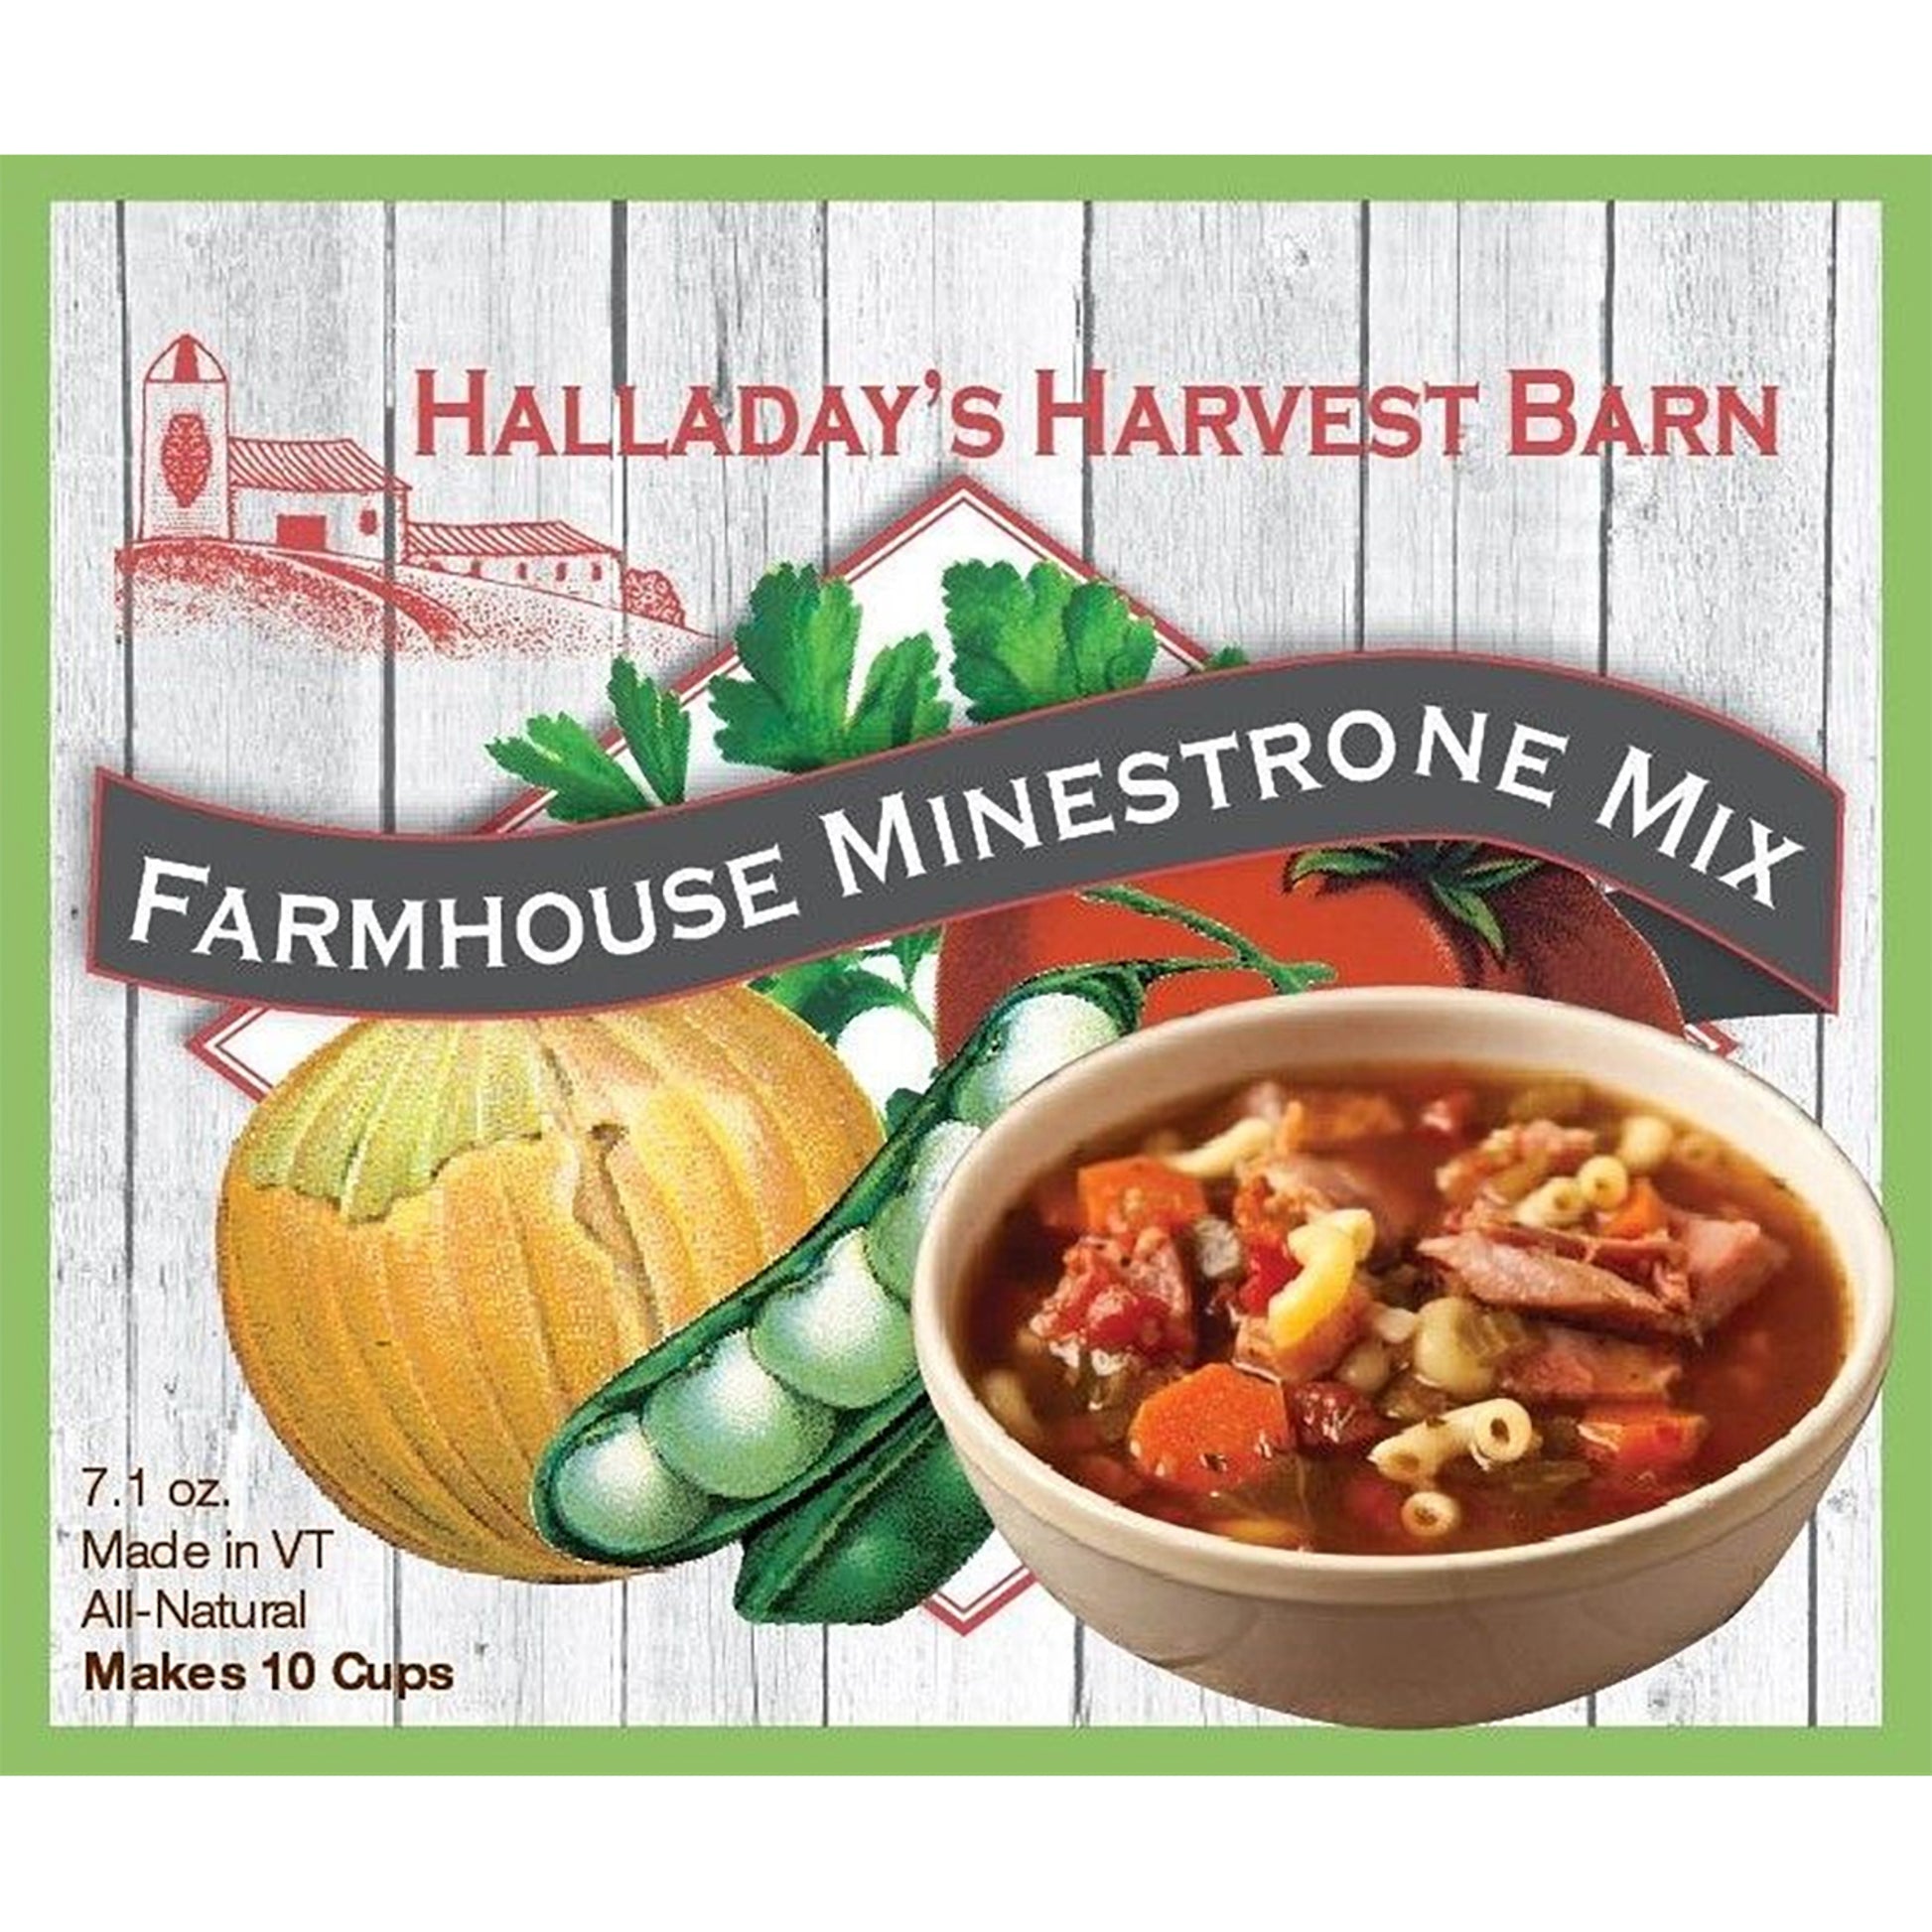 Farmhouse Minestrone Soup Mix